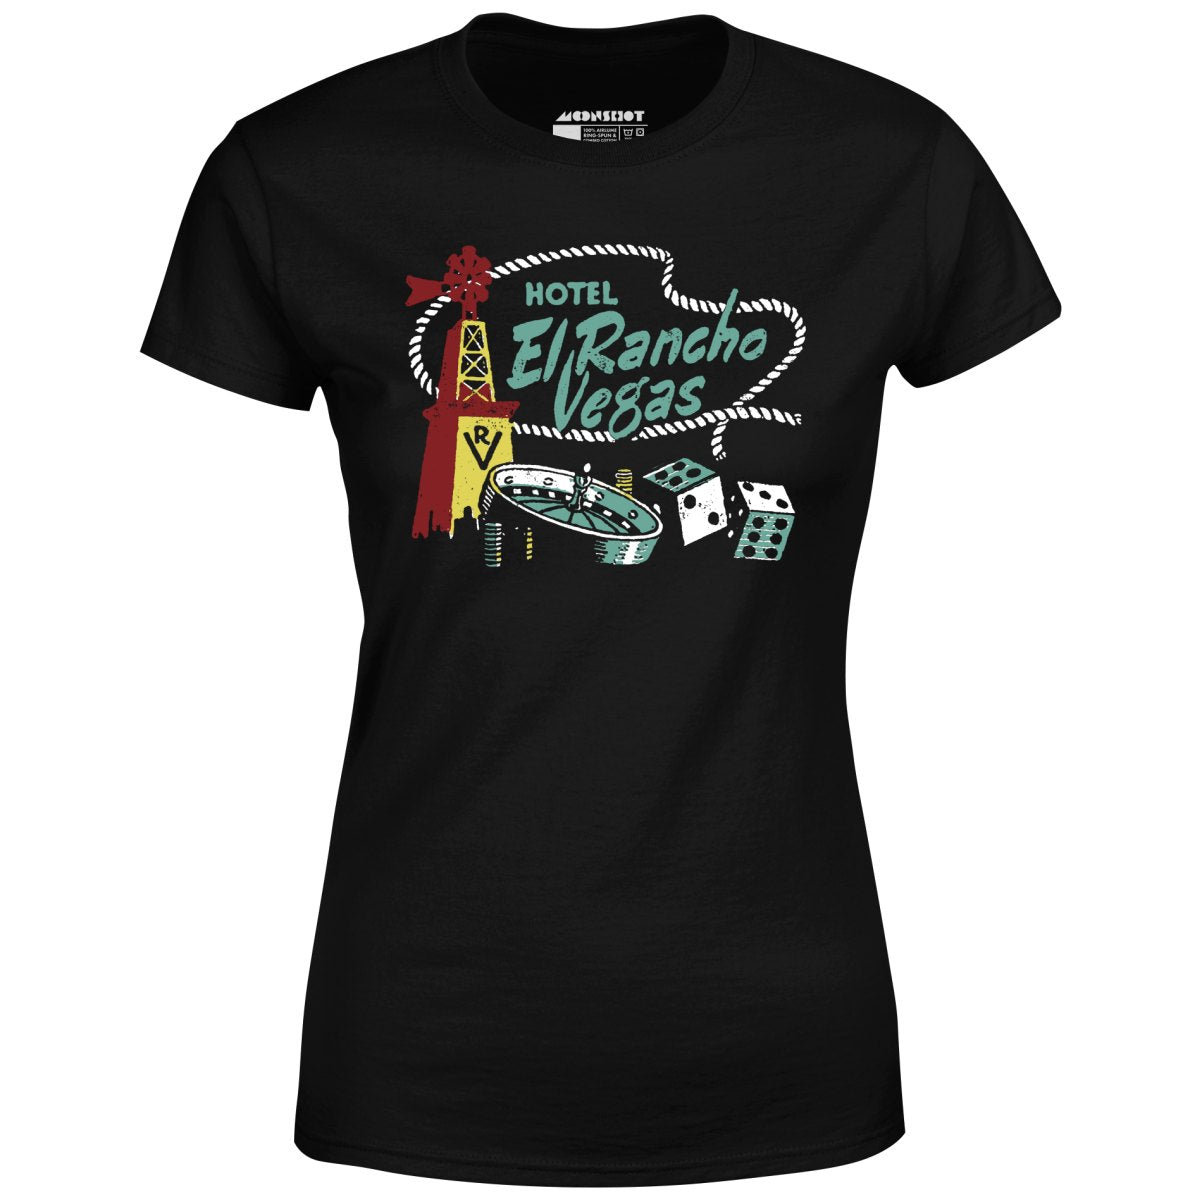 El Rancho - Vintage Las Vegas - Women's T-Shirt